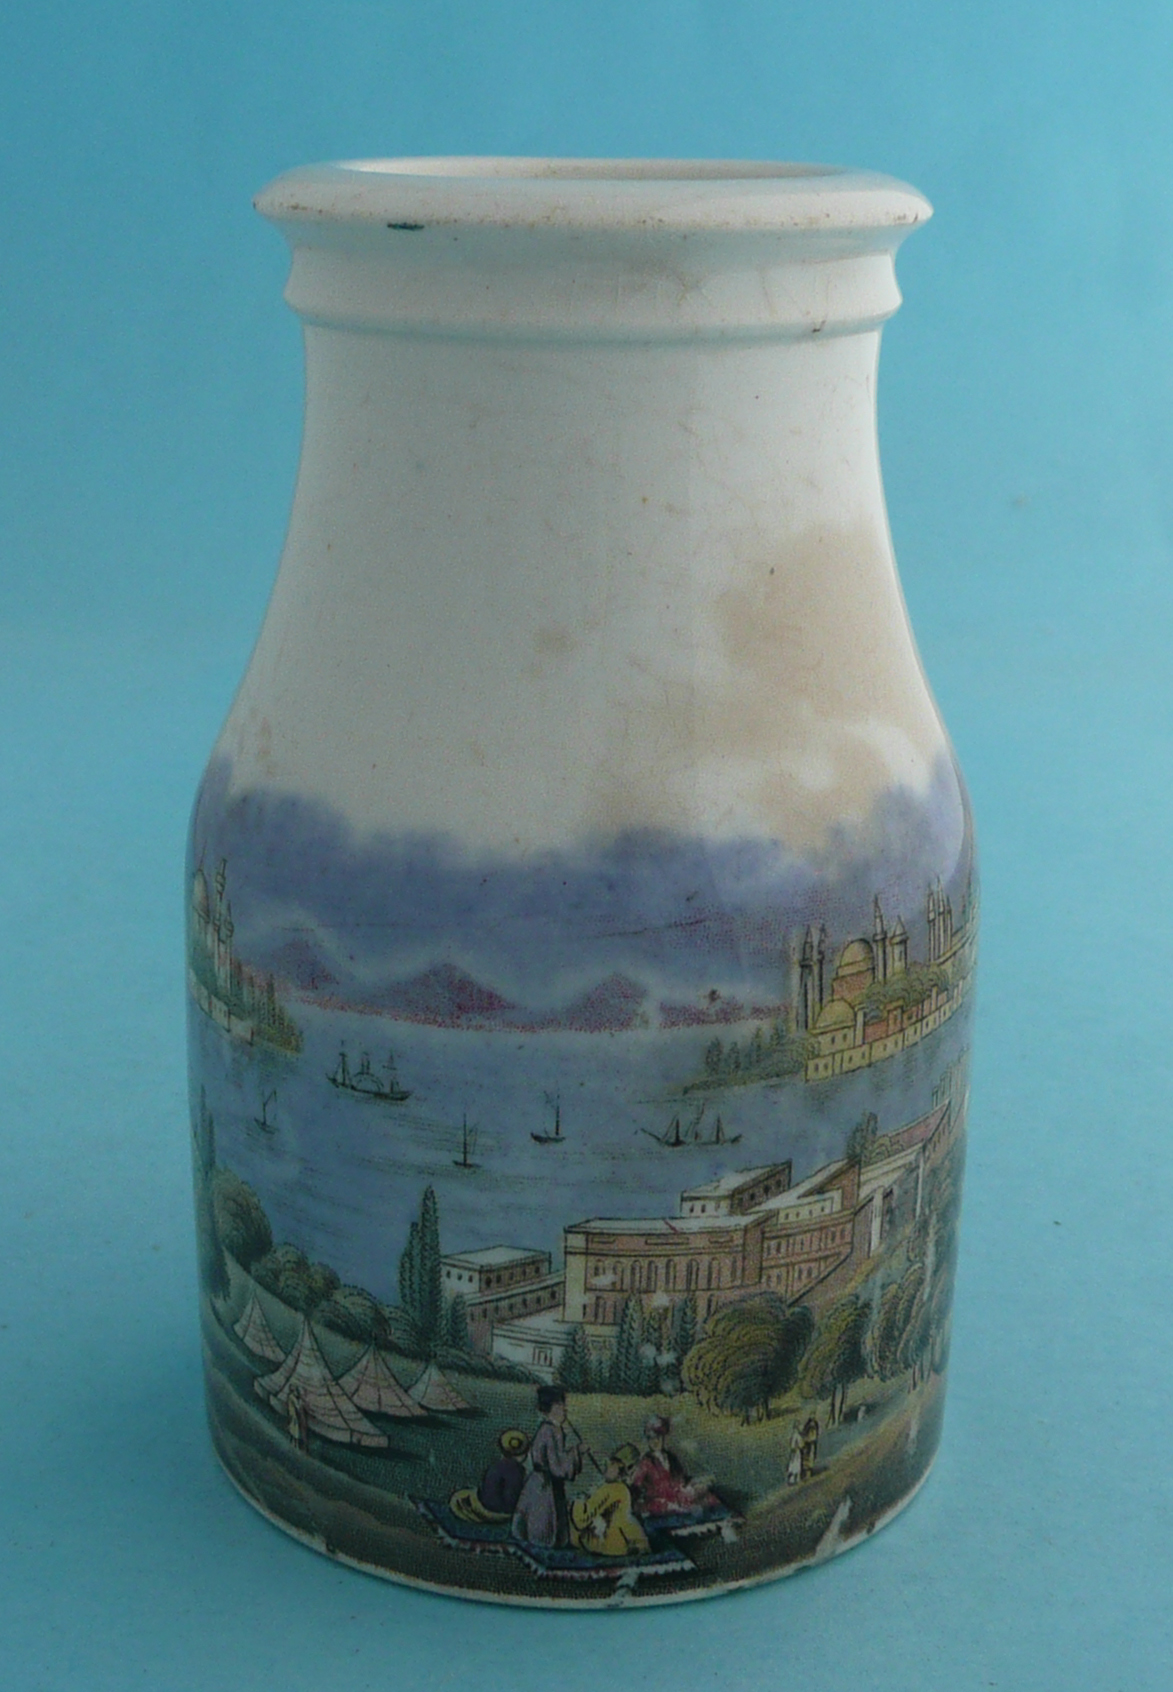 Constantinople (80) shaped jar